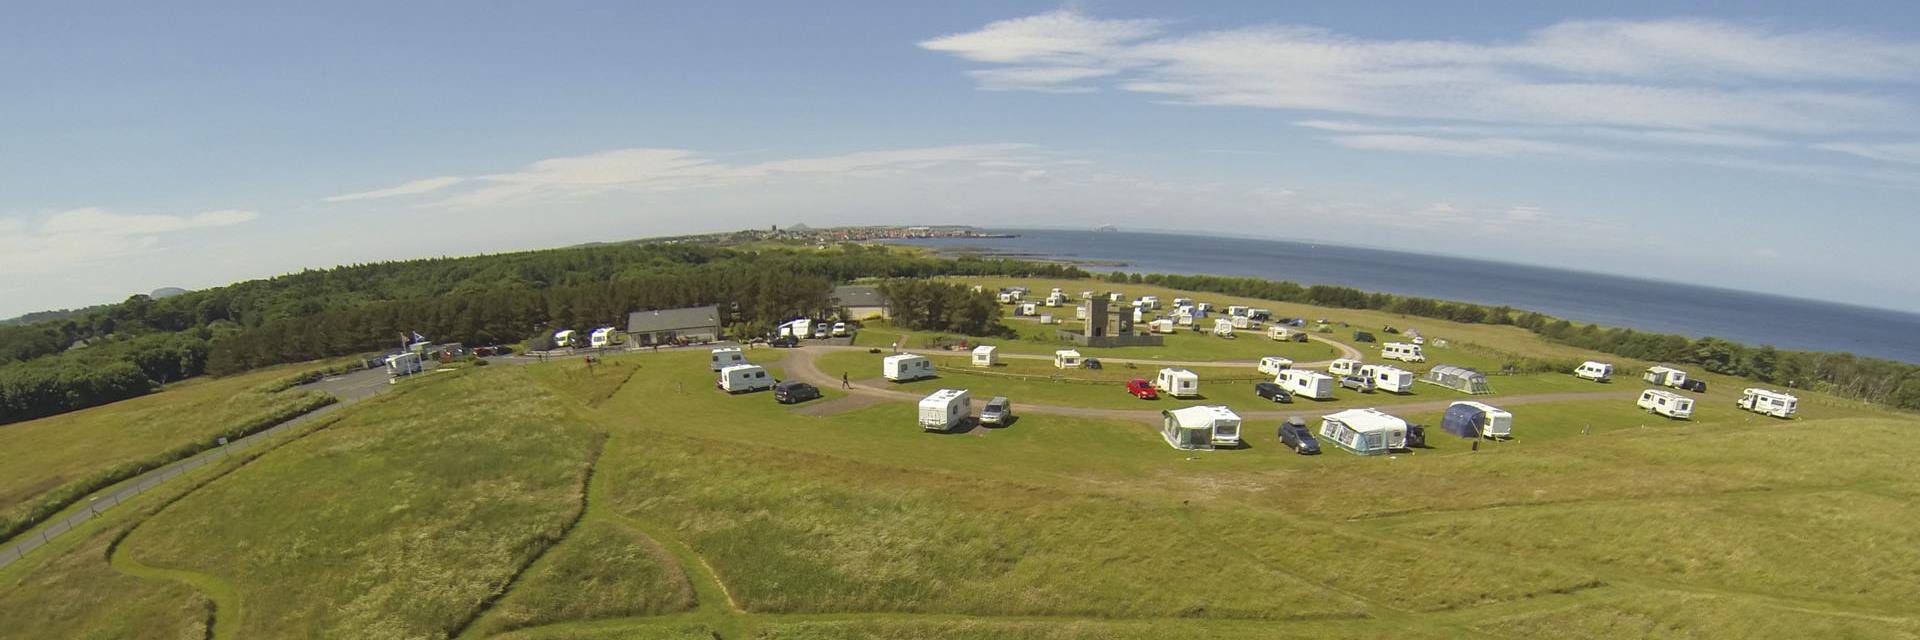 Aerial view of Dunbar Campsite